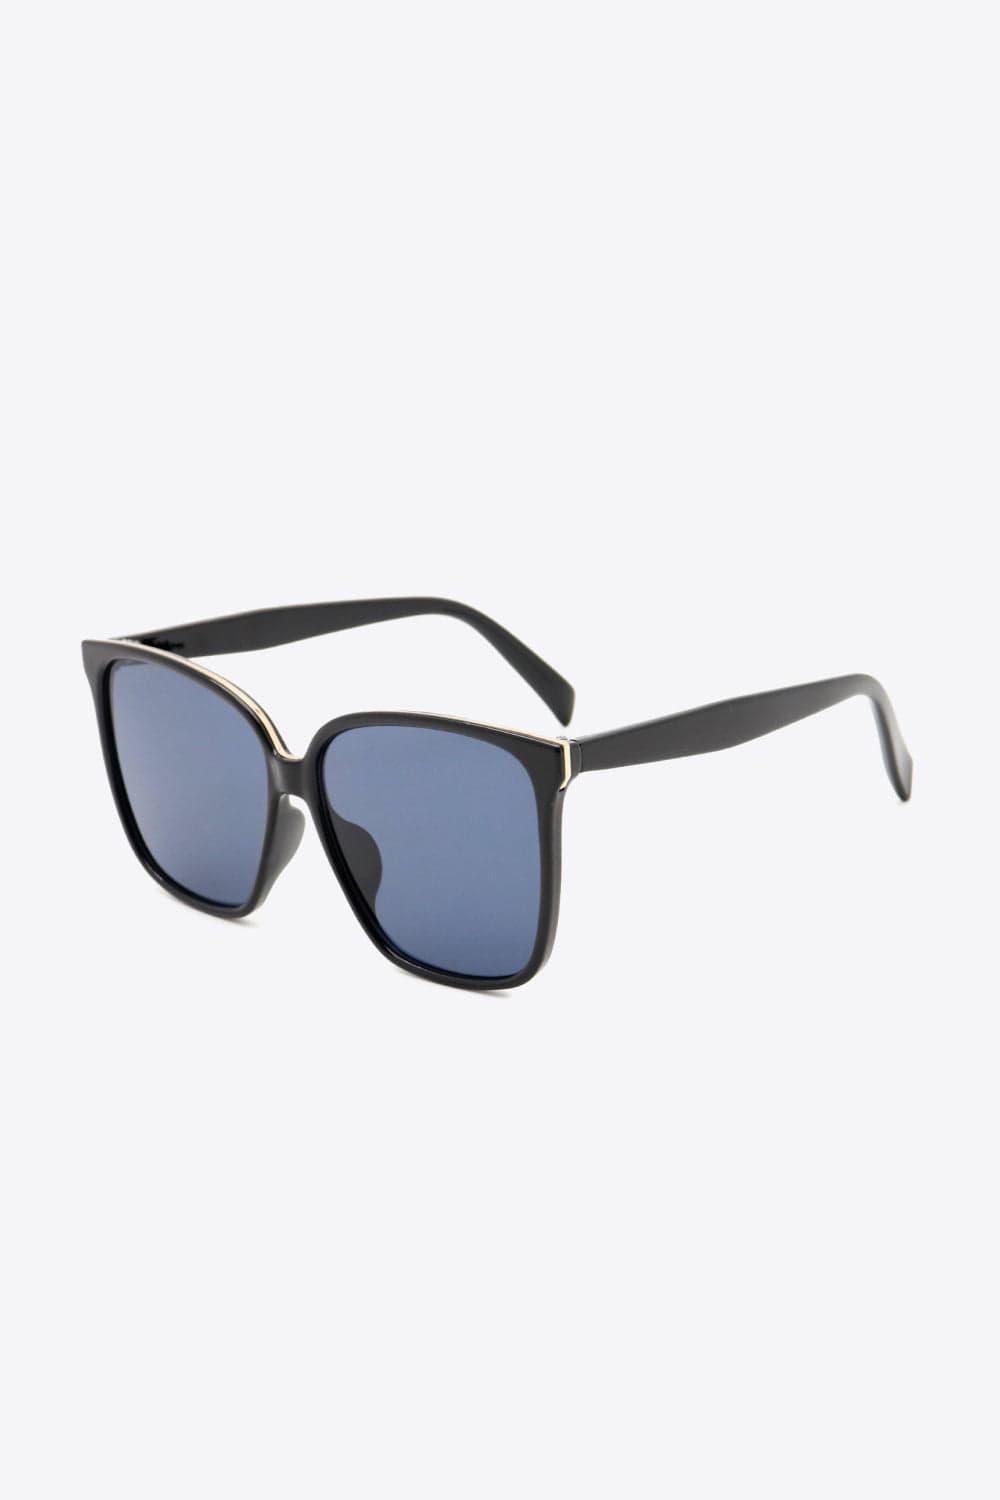 The802Gypsy sunglasses Dusty  Blue / One Size GYPSY-Polycarbonate Frame Wayfarer Sunglasses